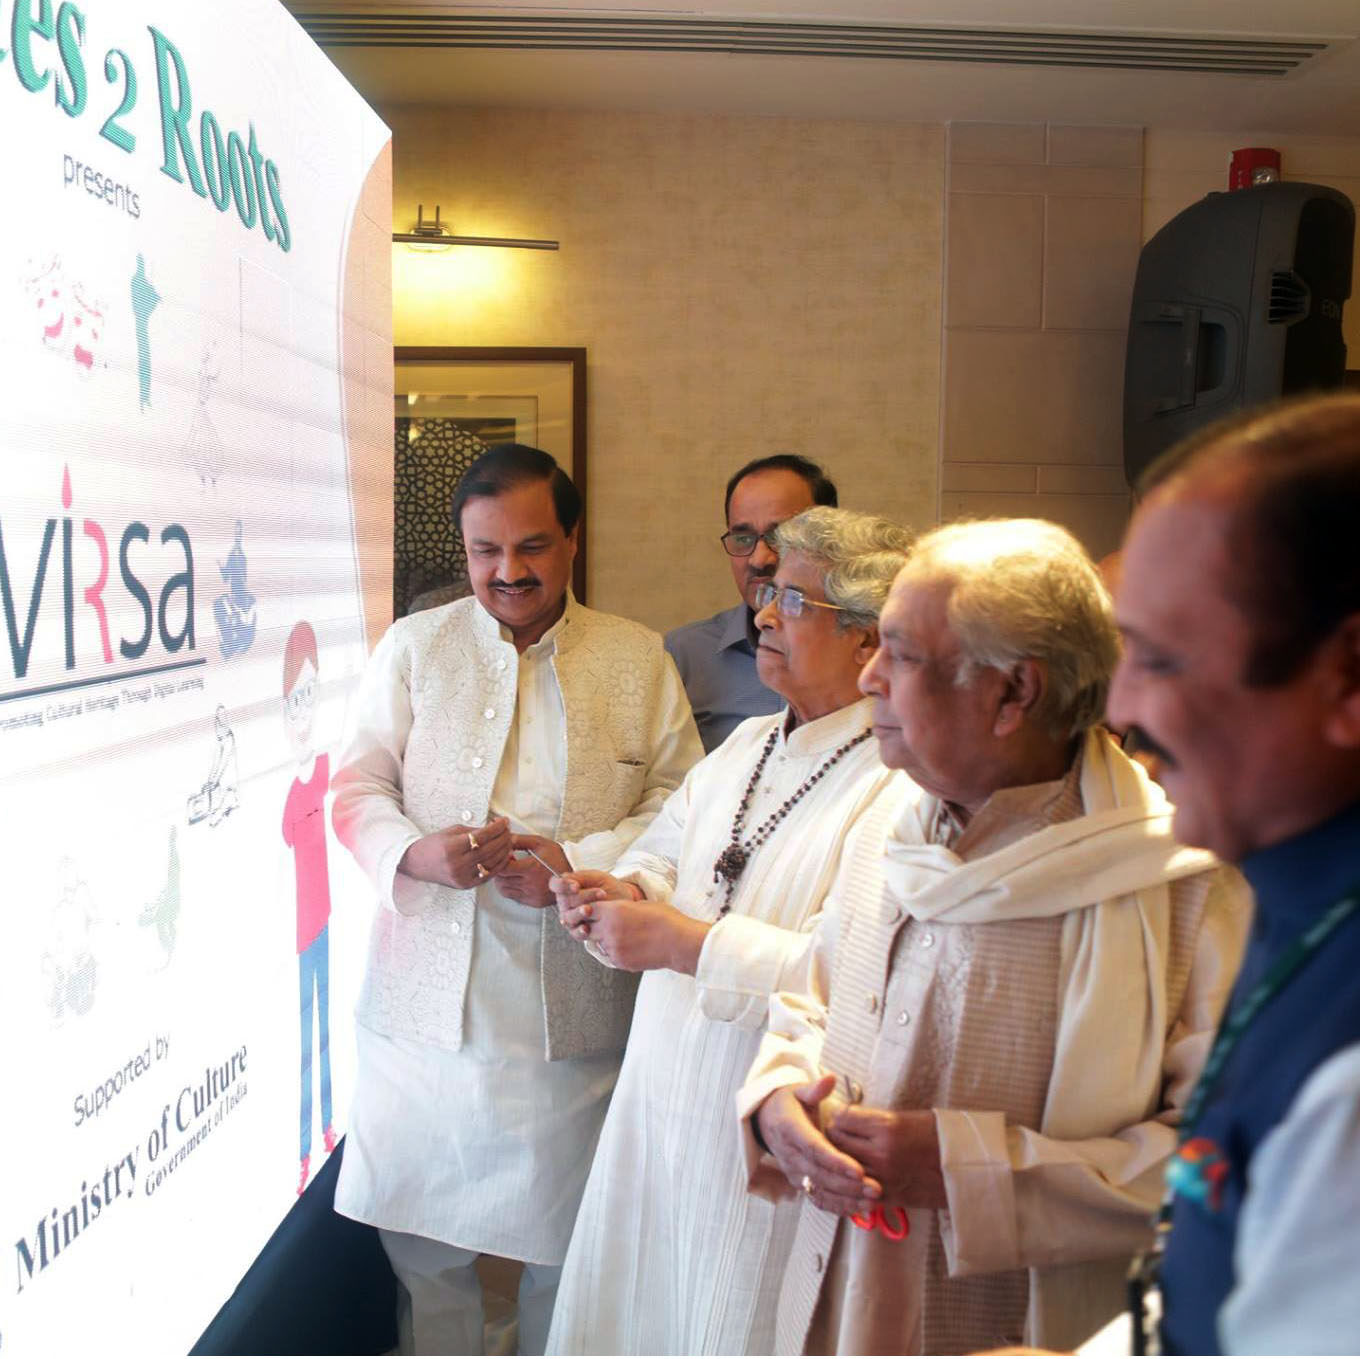 Virsa Program Launched